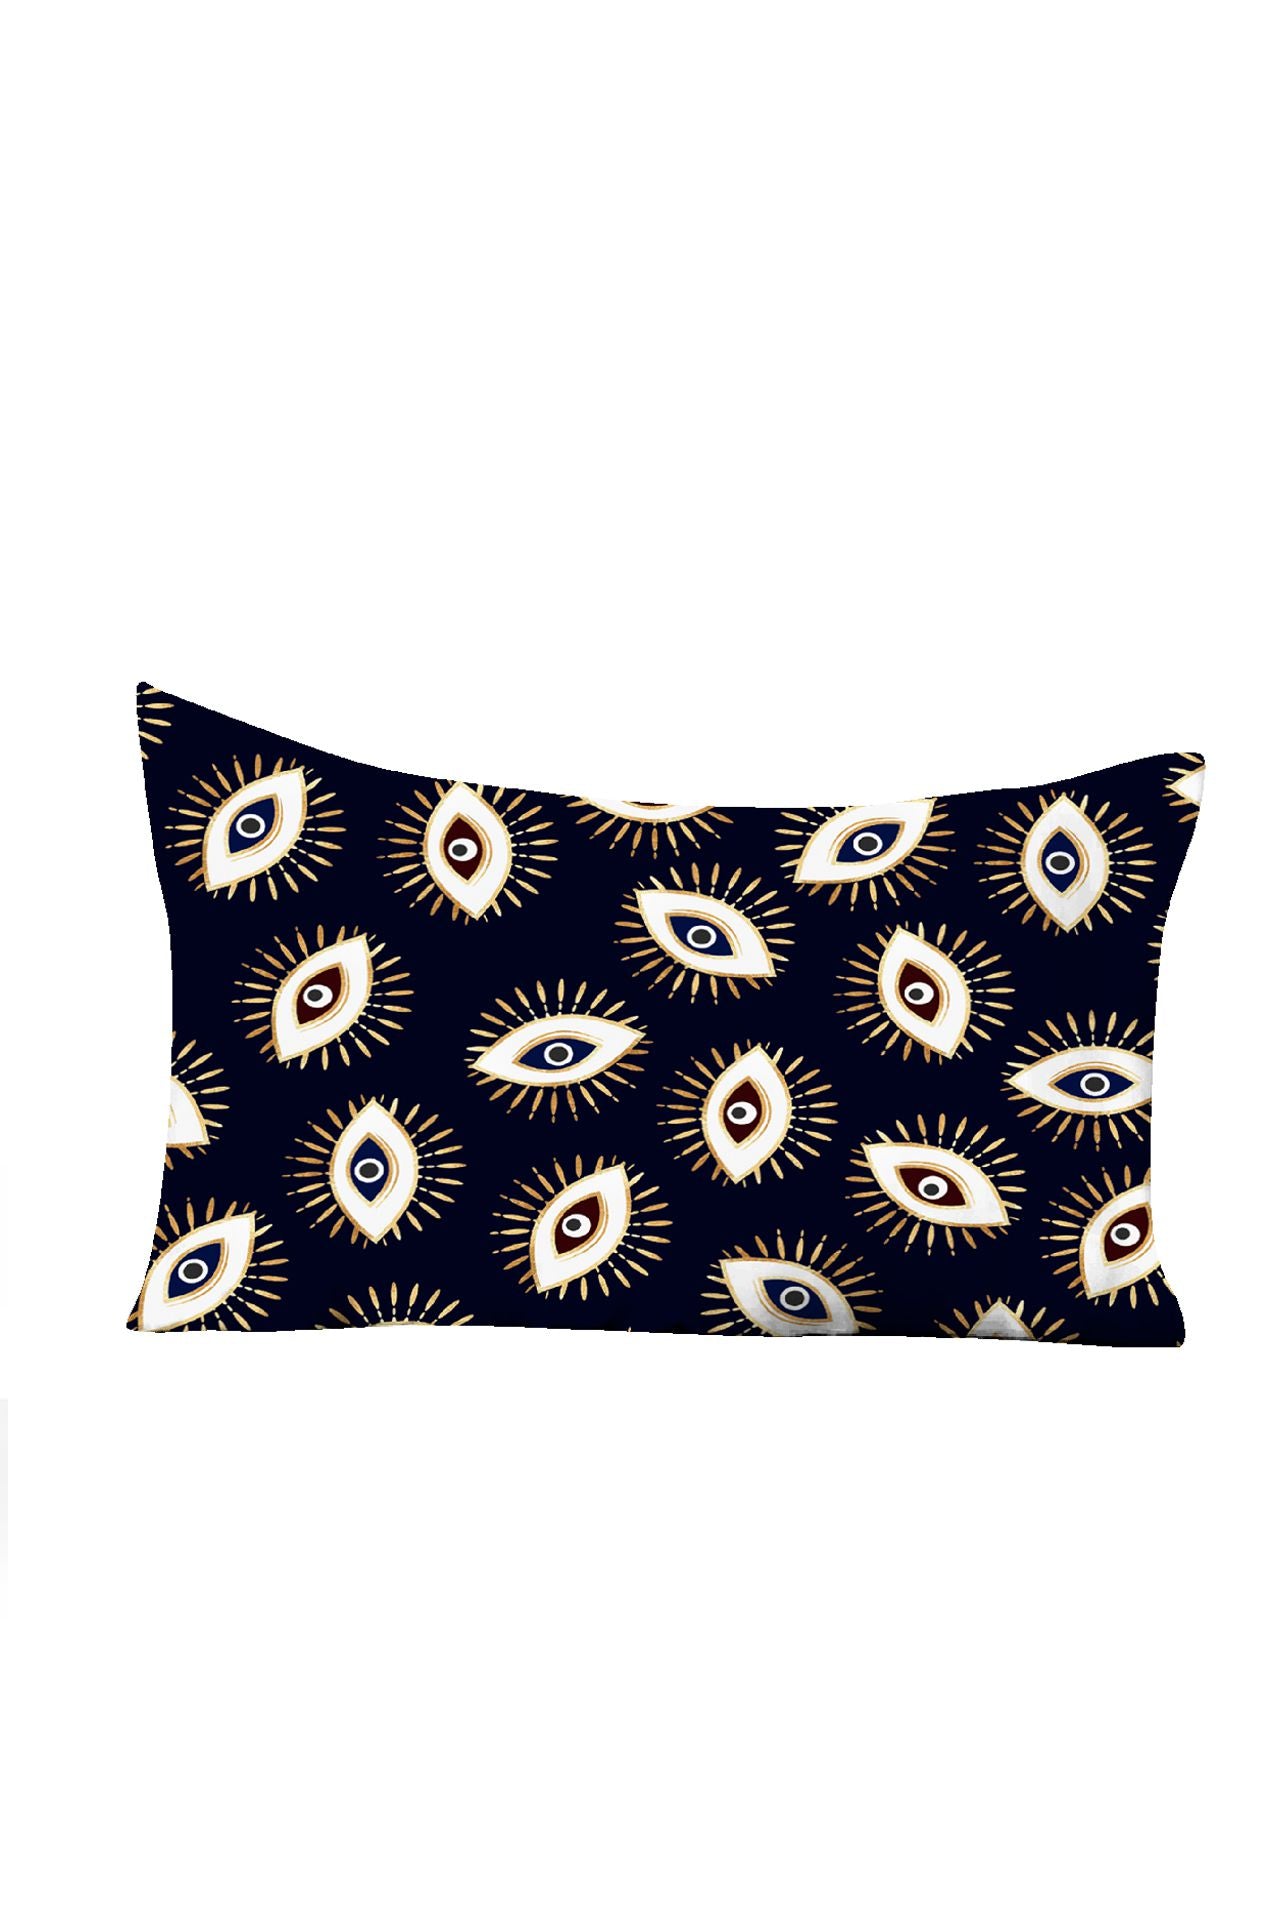 "dark throw pillows" "best decorative pillows" "Kyle X Shahida" "modern pillow throw"